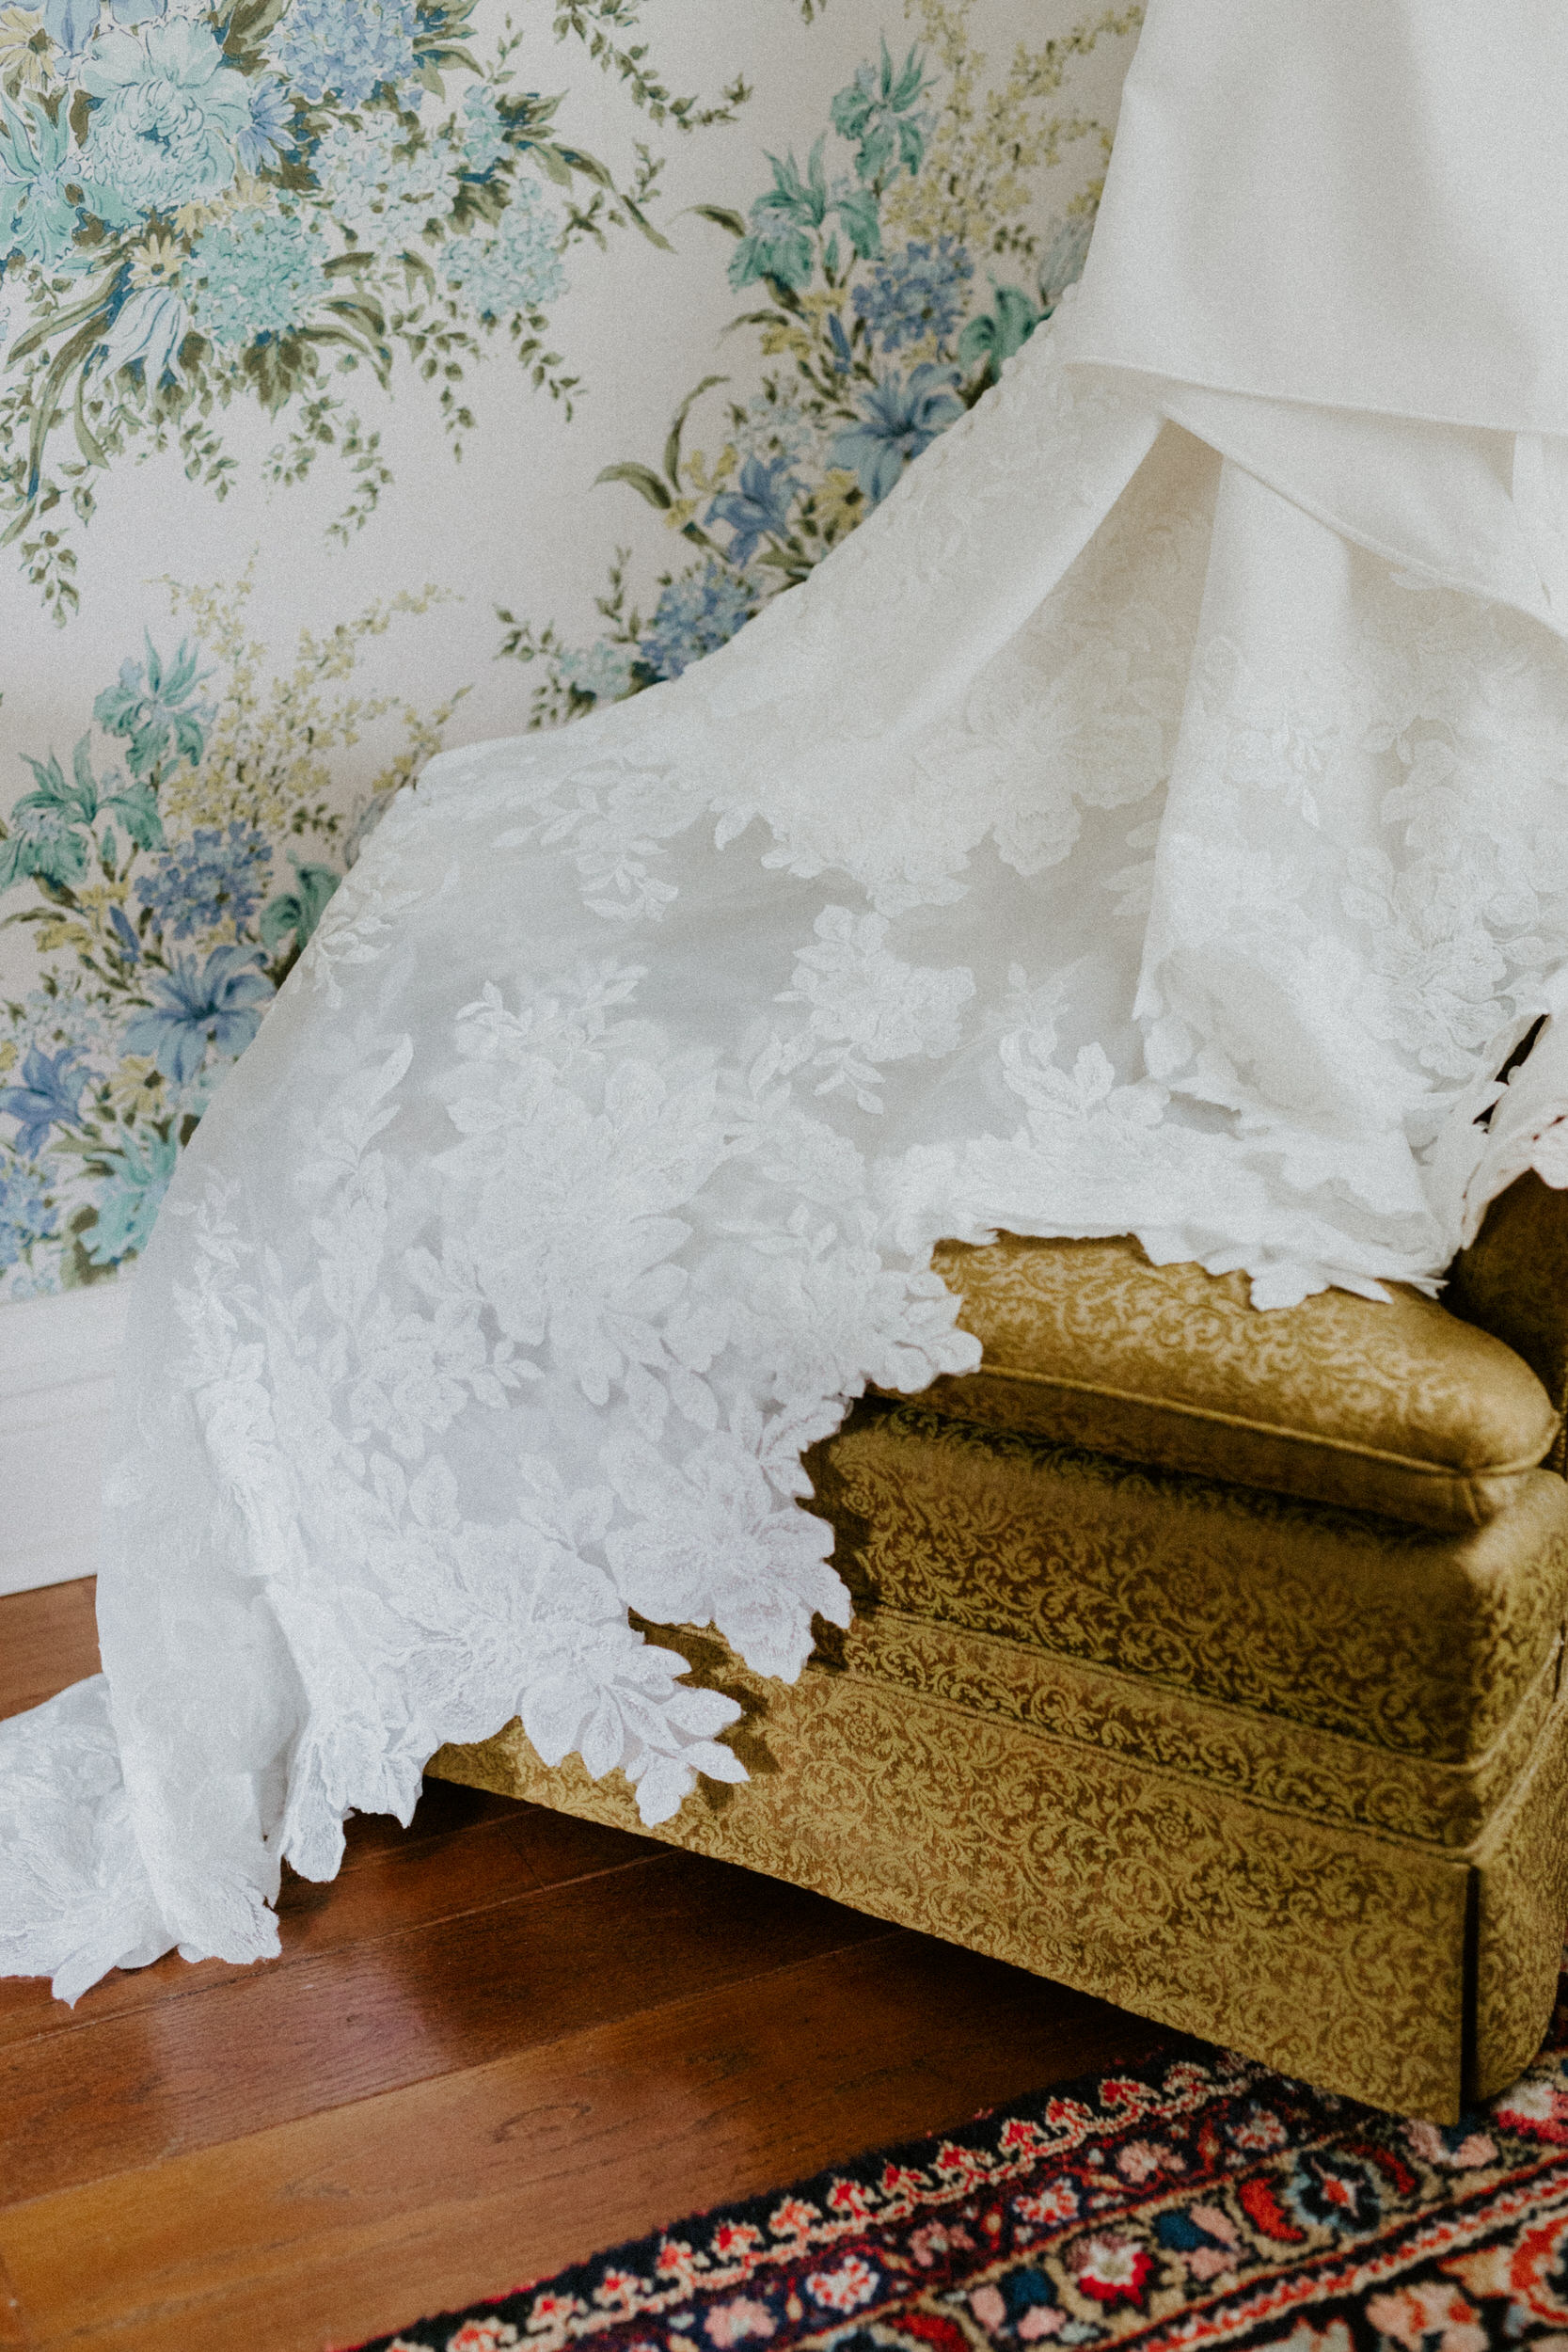 Vintage lace wedding dress